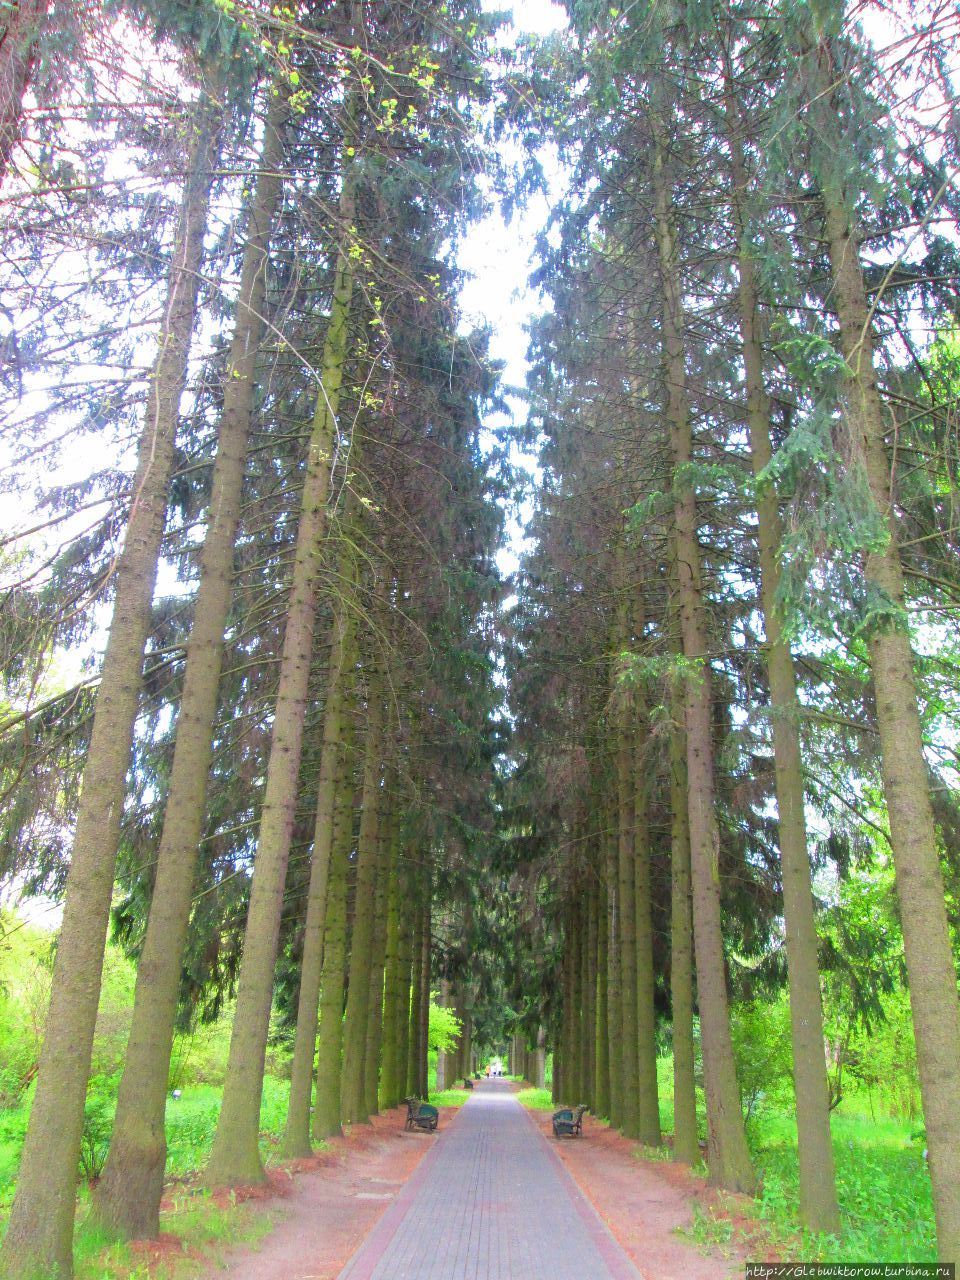 Прогулка по Ботаническому саду — от входа до озера Минск, Беларусь